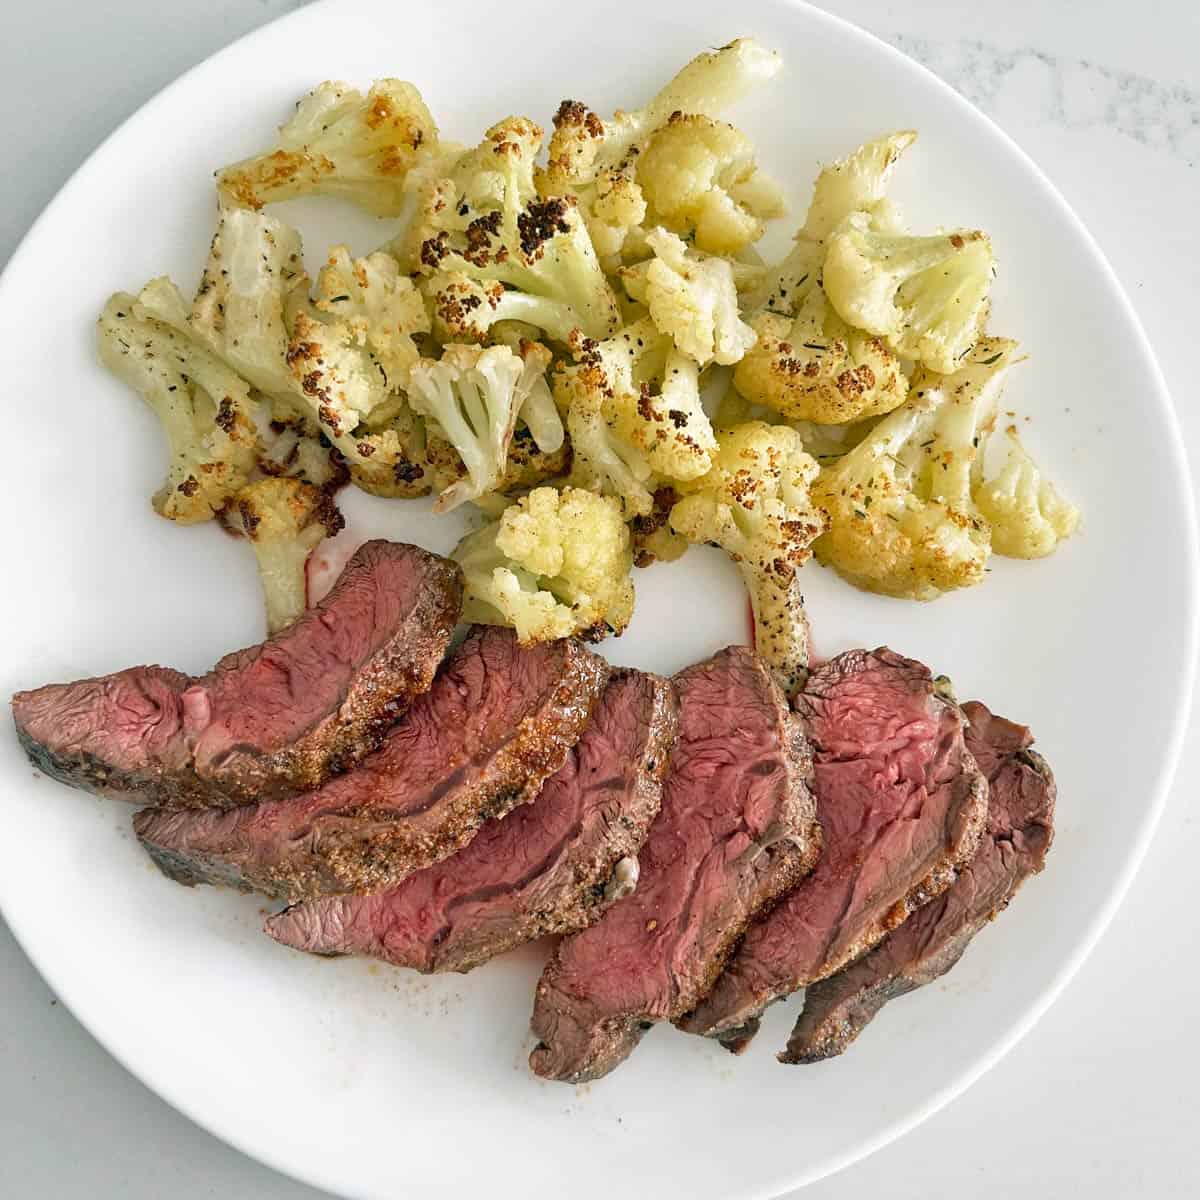 Sliced flat iron steak is served with roasted cauliflower.